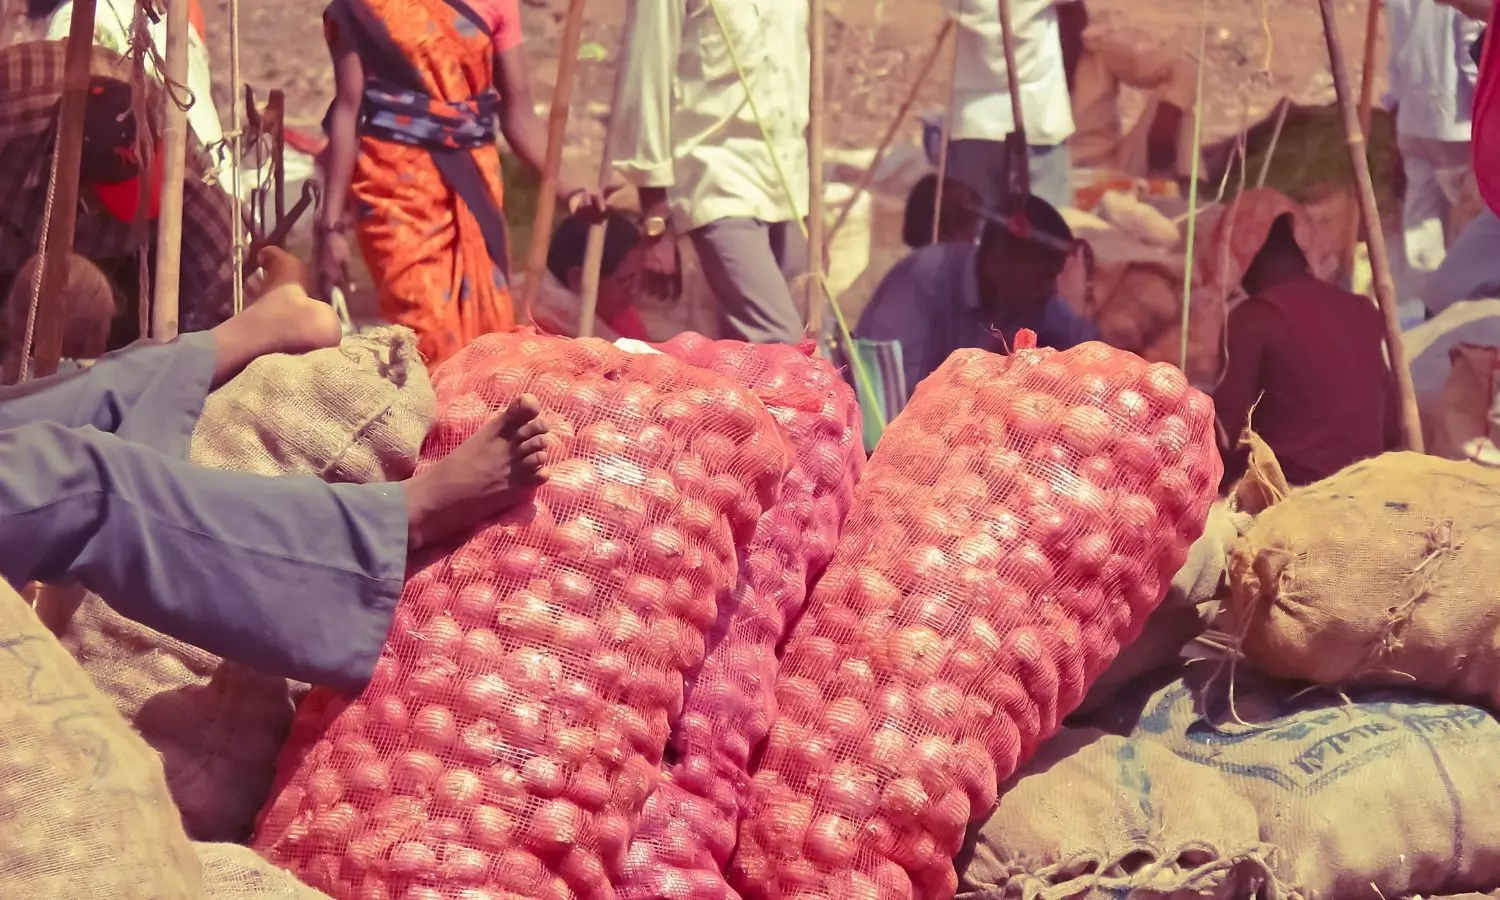 Potato sacks in a wholesale market in India